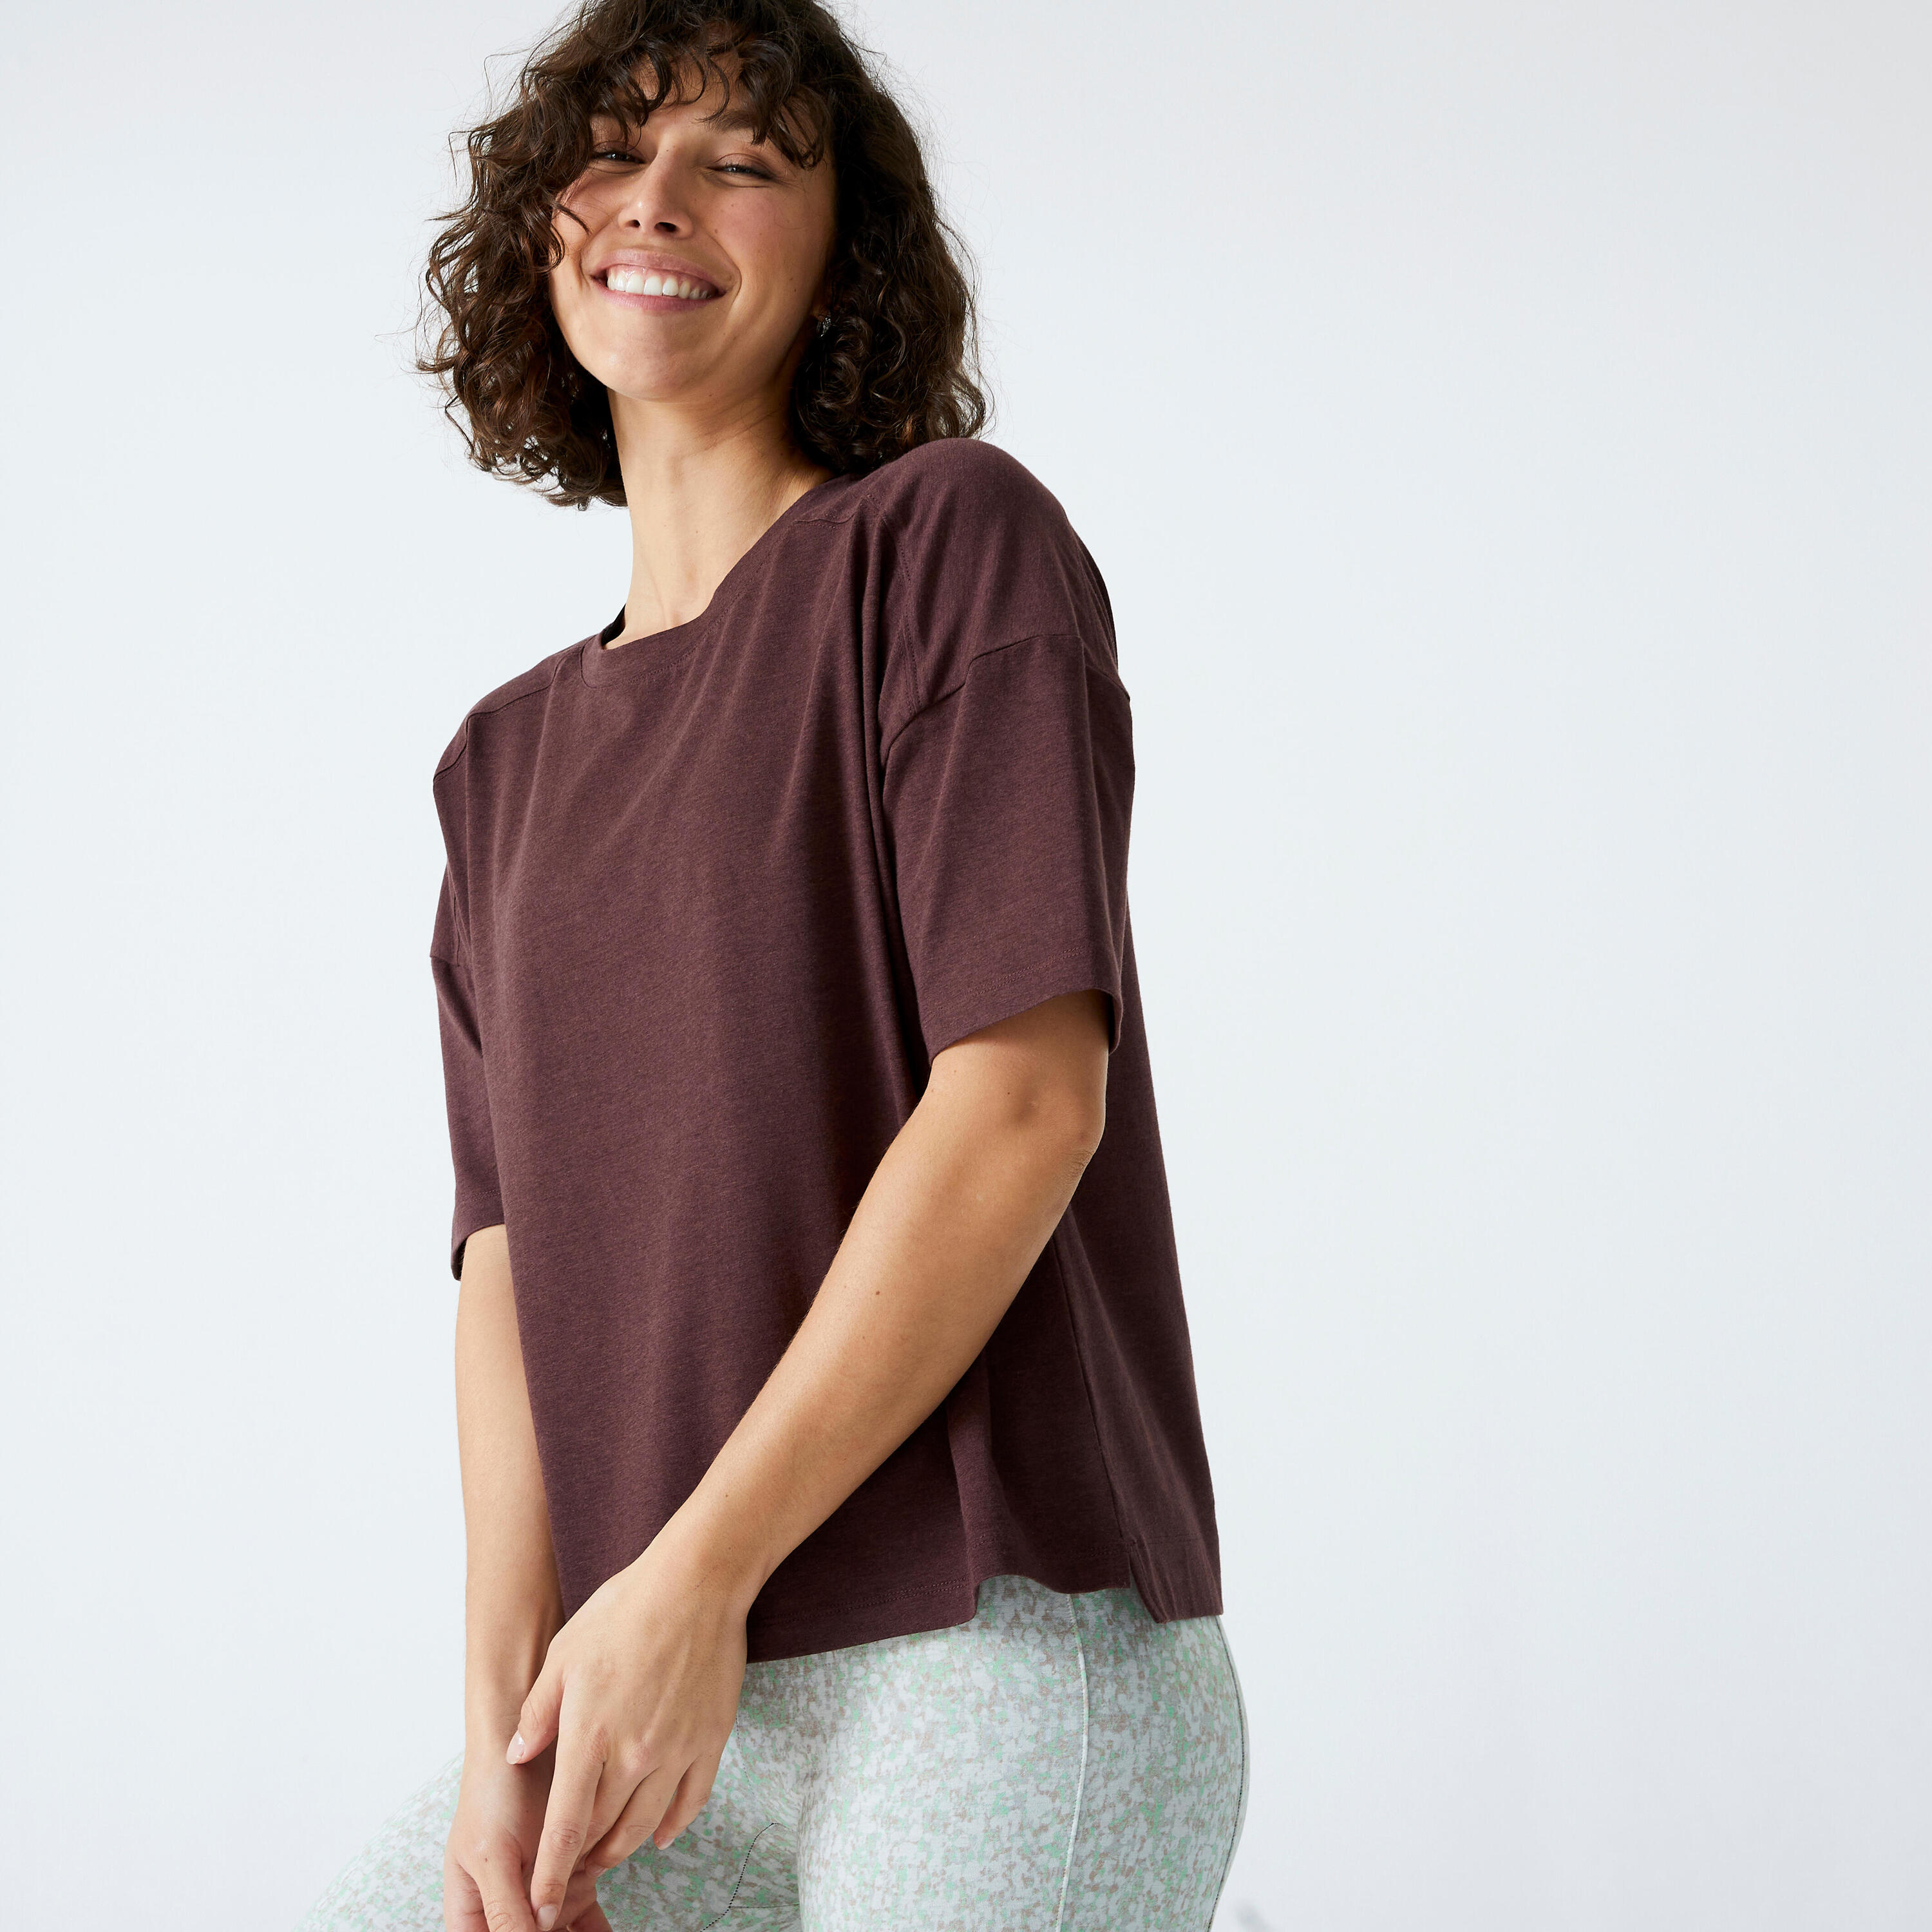 Women's Loose-Fit Fitness T-Shirt 520 - Dark Brown 1/5